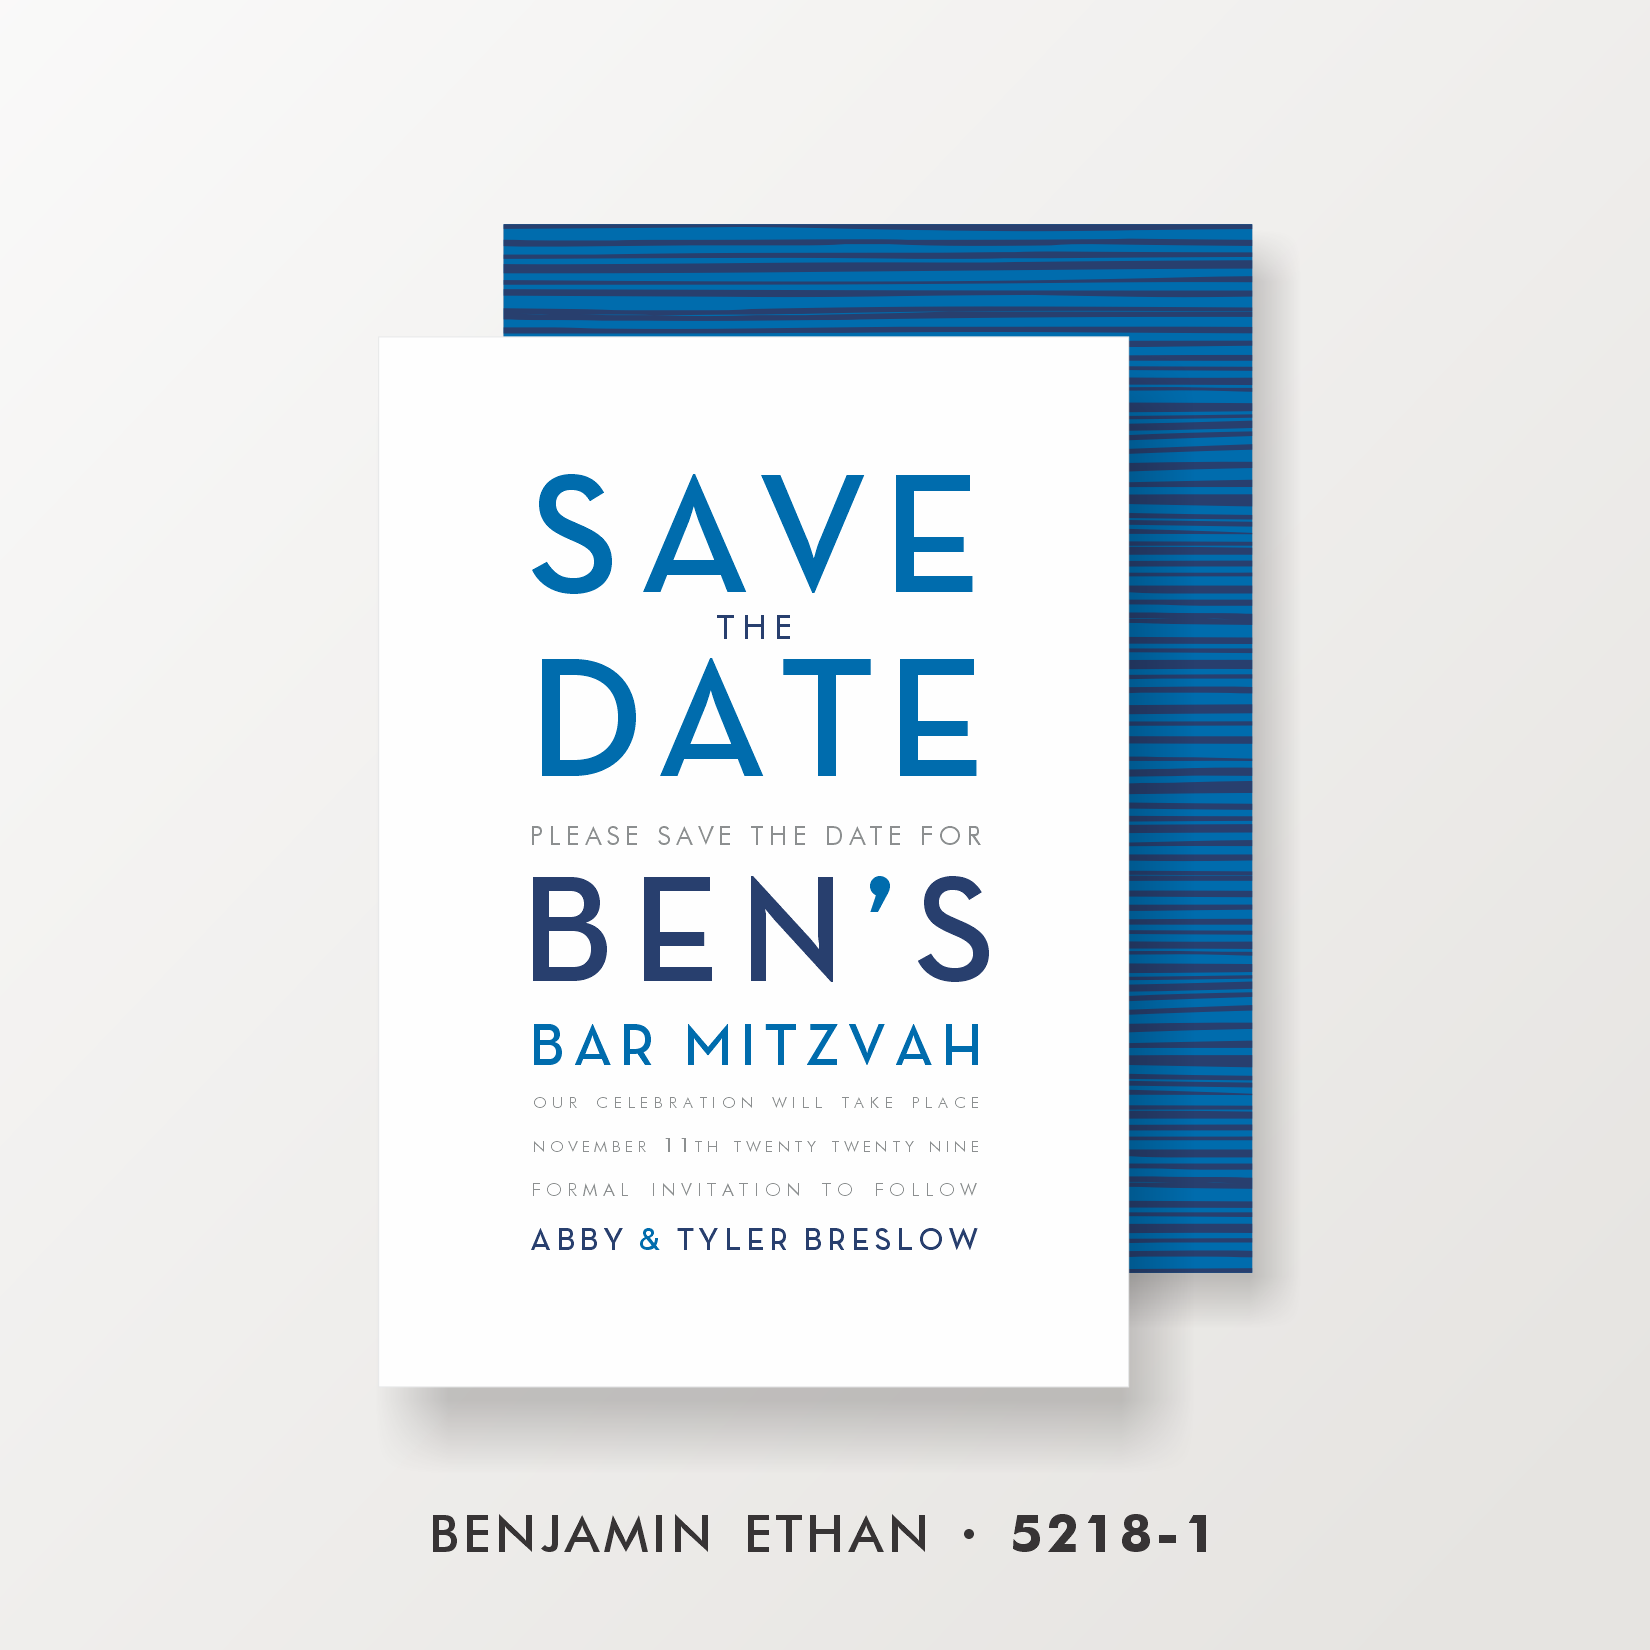 SARAH SCHWARTZ BAR MITZVAH SAVE THE DATE 5218-1